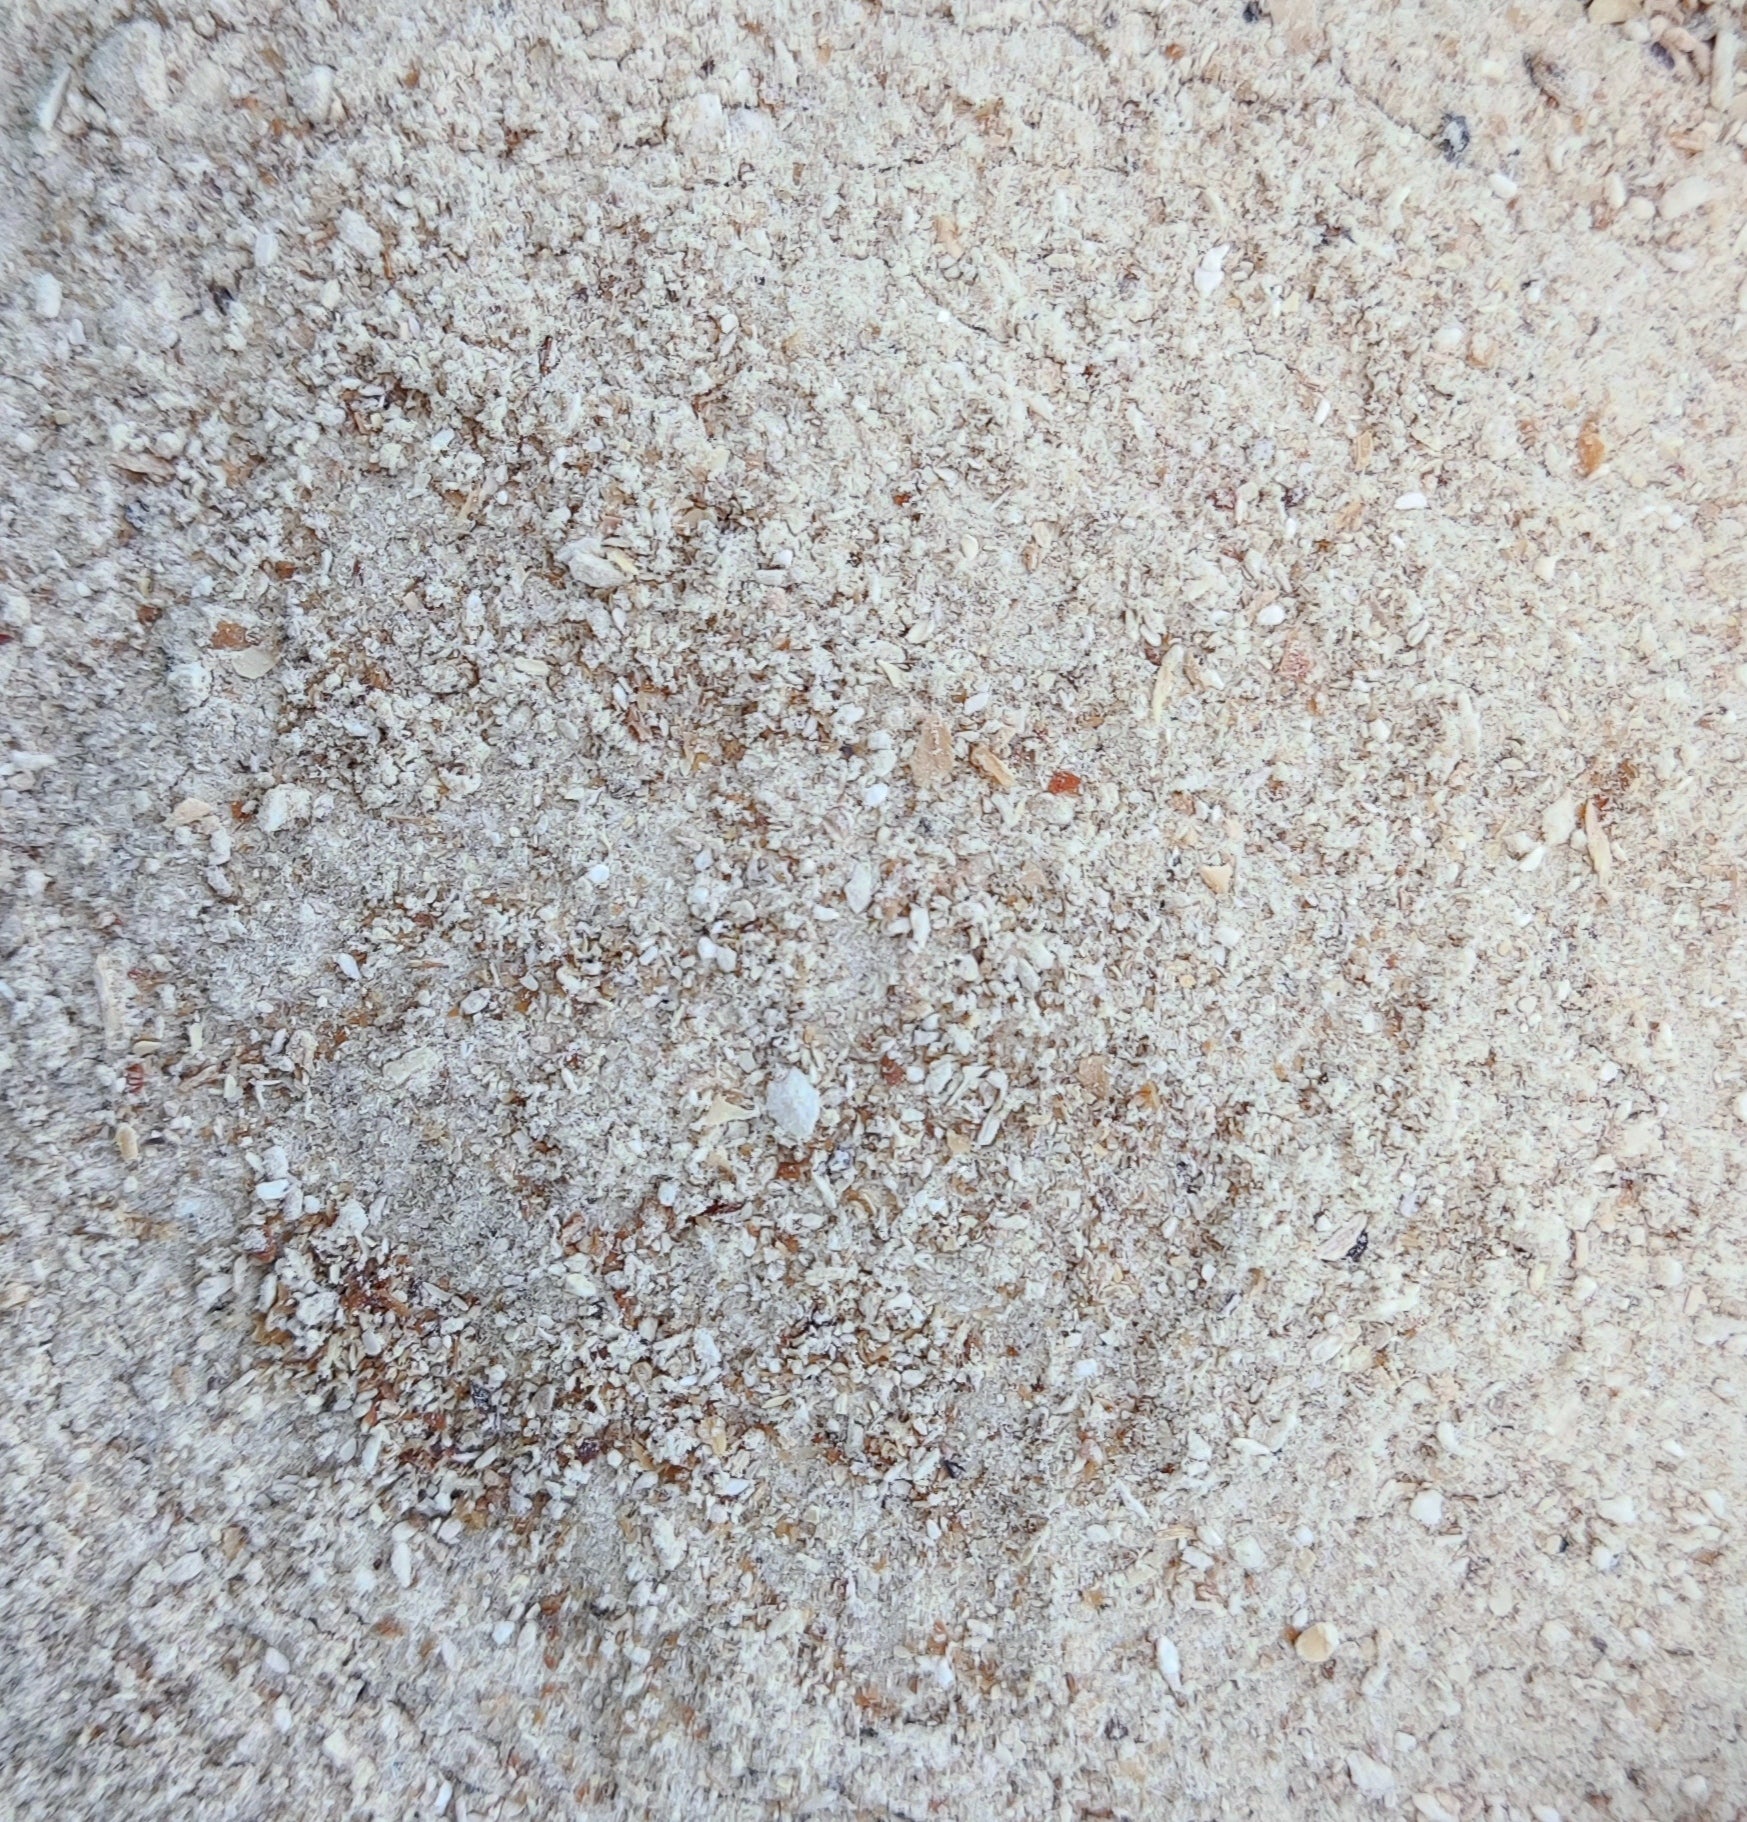 Poudre de pleurote en huître (Pleurotus Ostreatus)